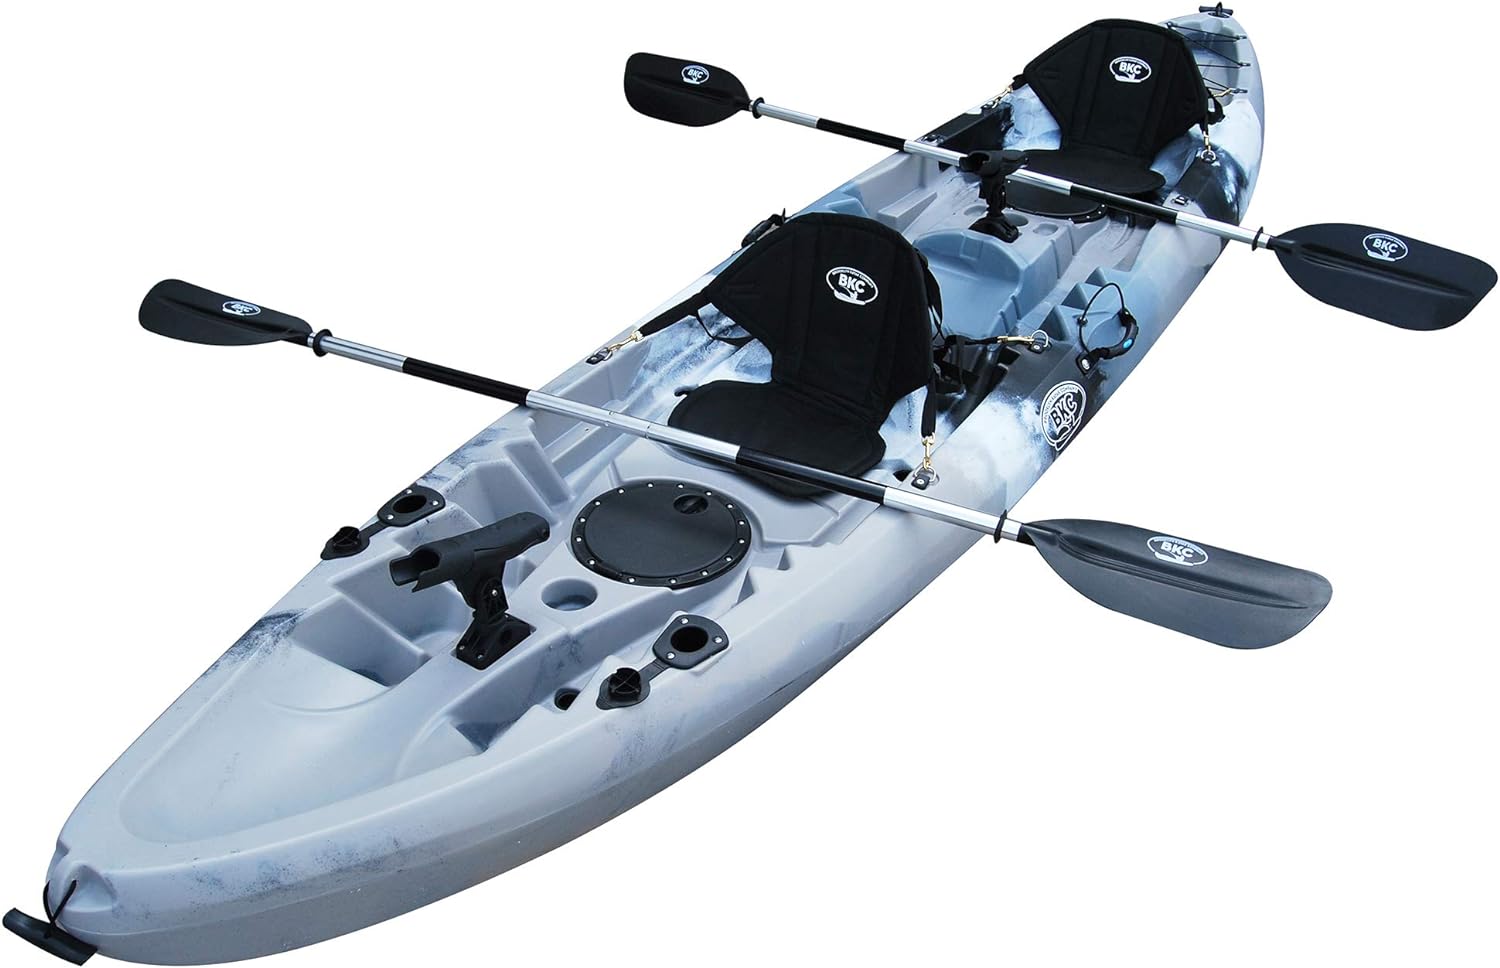 BKC TK219 12.2 Tandem Fishing Kayak W/Soft Padded Seats, Paddles,6 Rod Holders Included 2-3 Person Angler Kayak